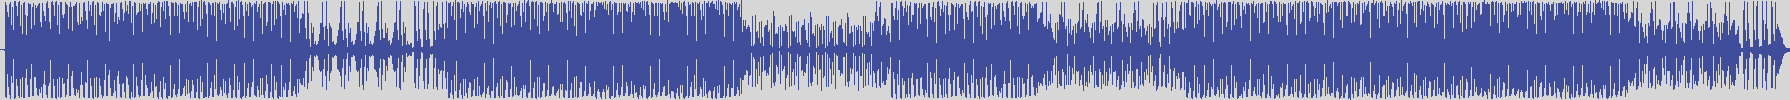 nf_boyz_records [NFY075] Paco Bigat - Audax [Original Mix] audio wave form